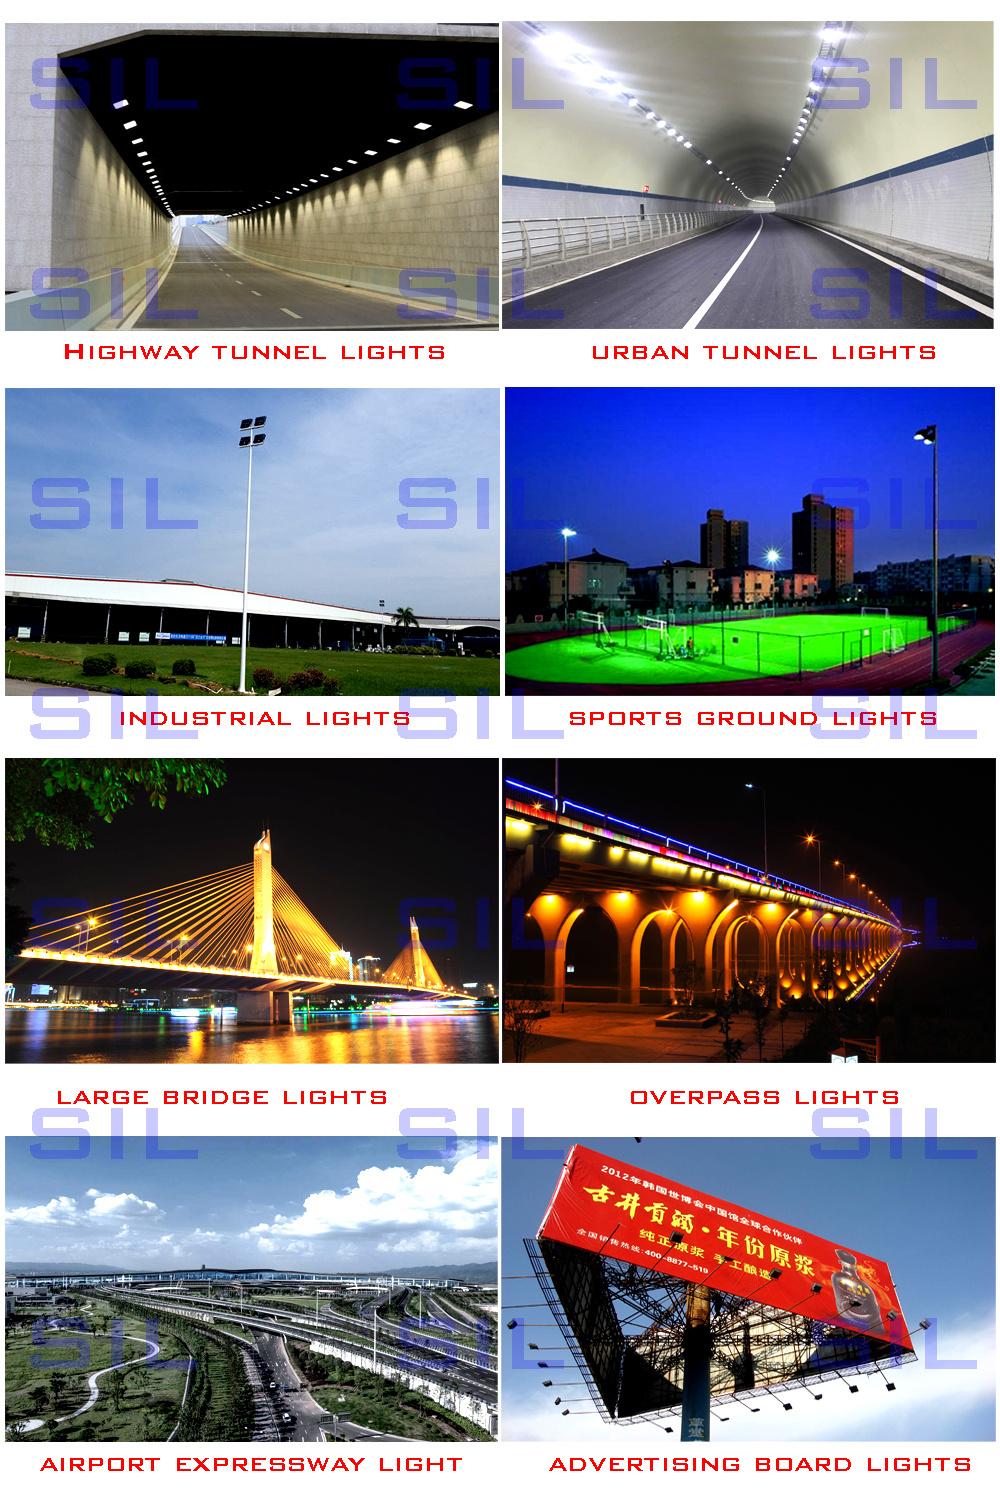 Good Supplier LED Floodlight Aluminum Material Heat Dissipation Shell 100watt Power SMD CE RoHS LED Flood Light